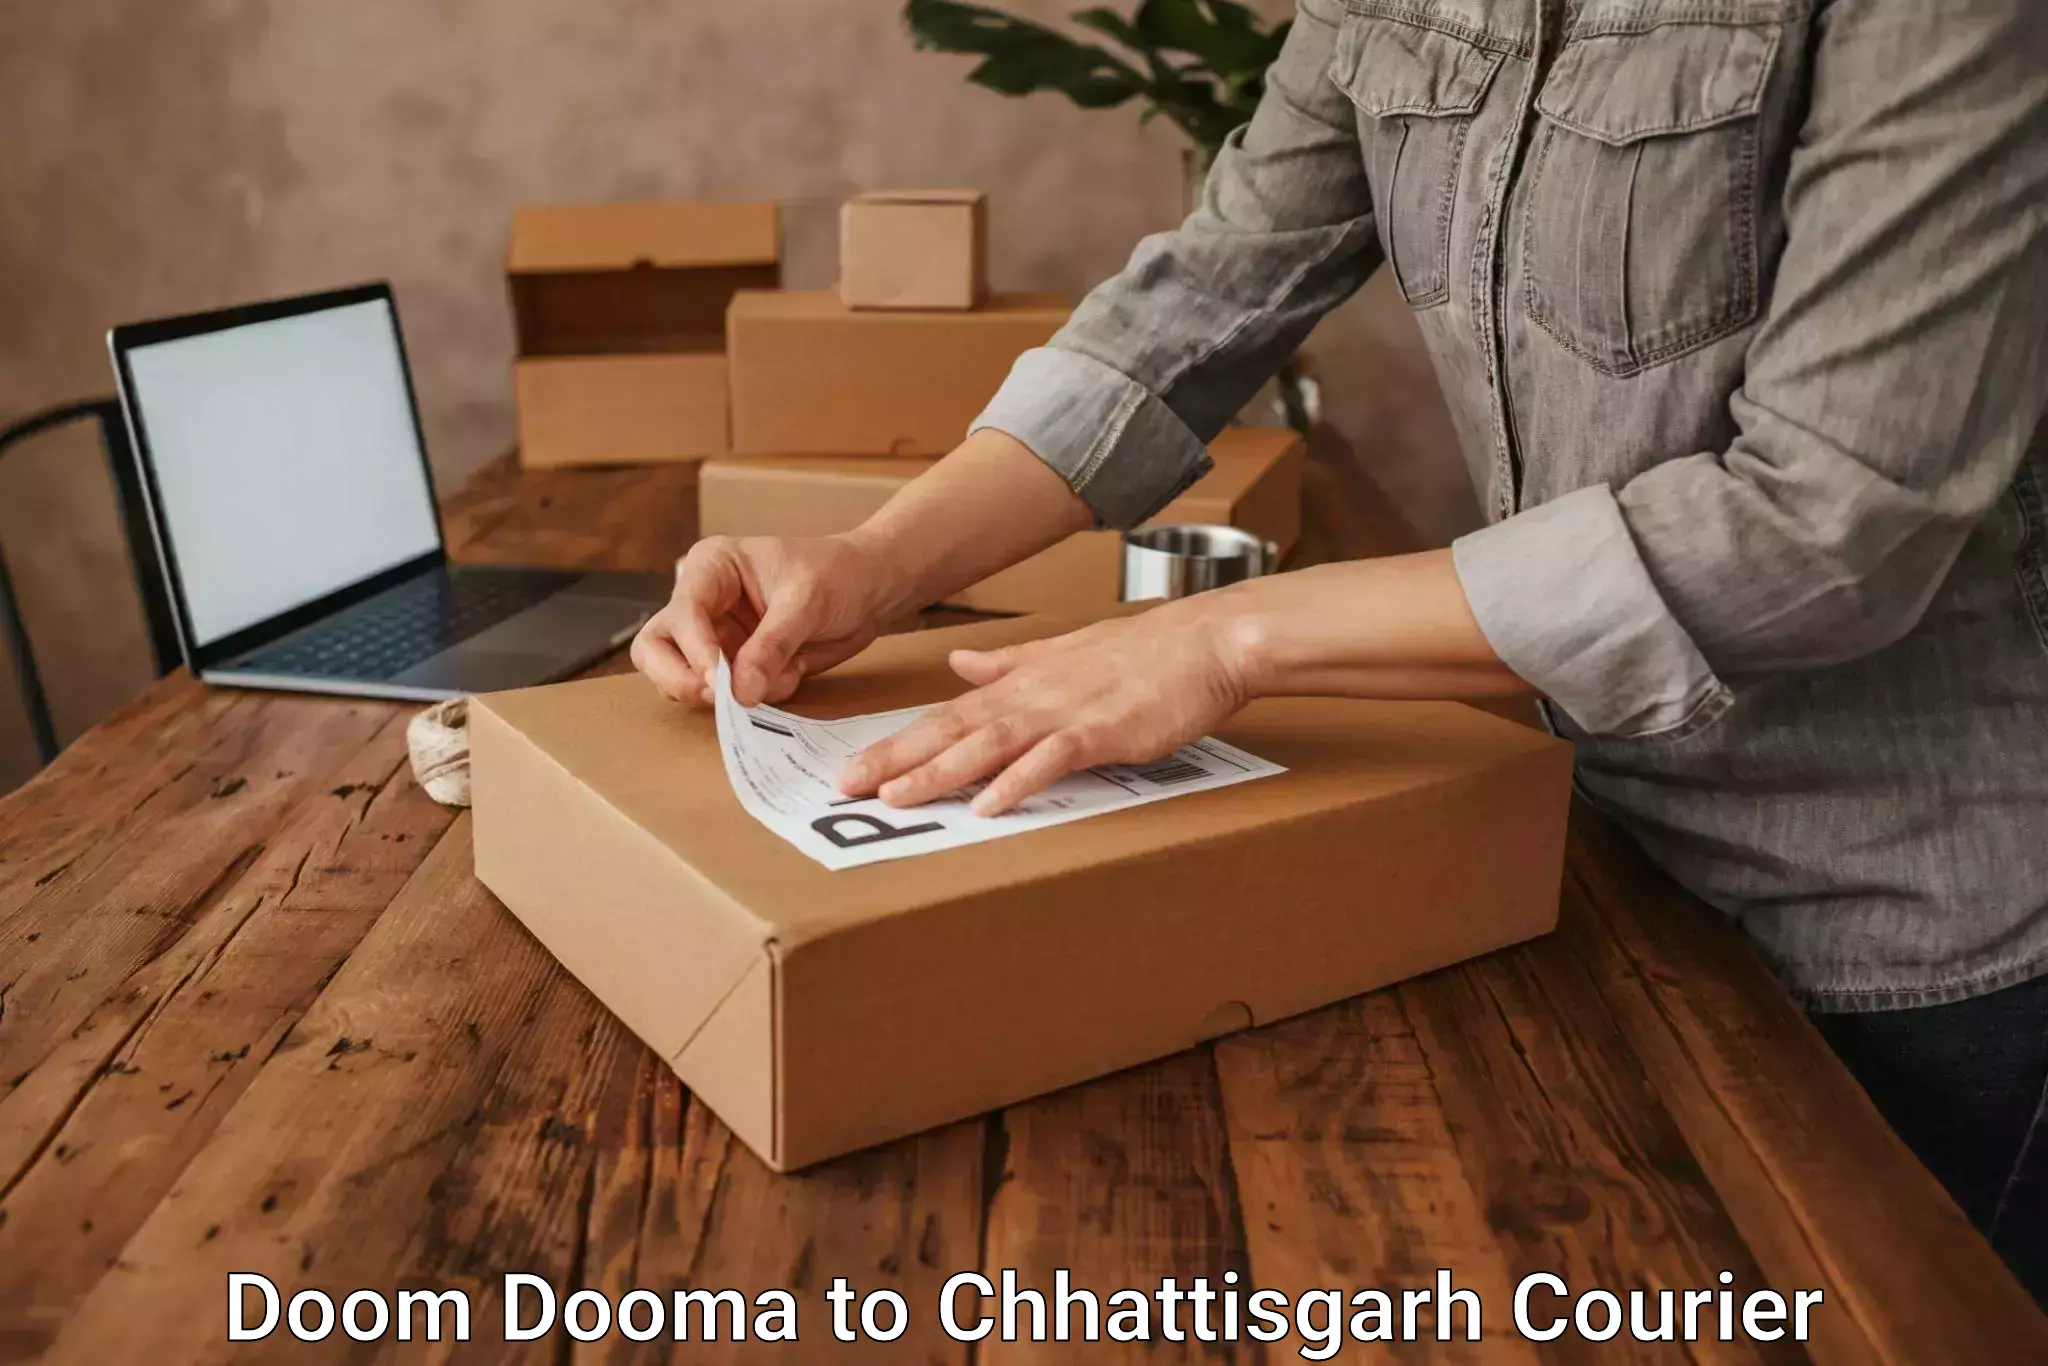 Express delivery capabilities Doom Dooma to Chhattisgarh